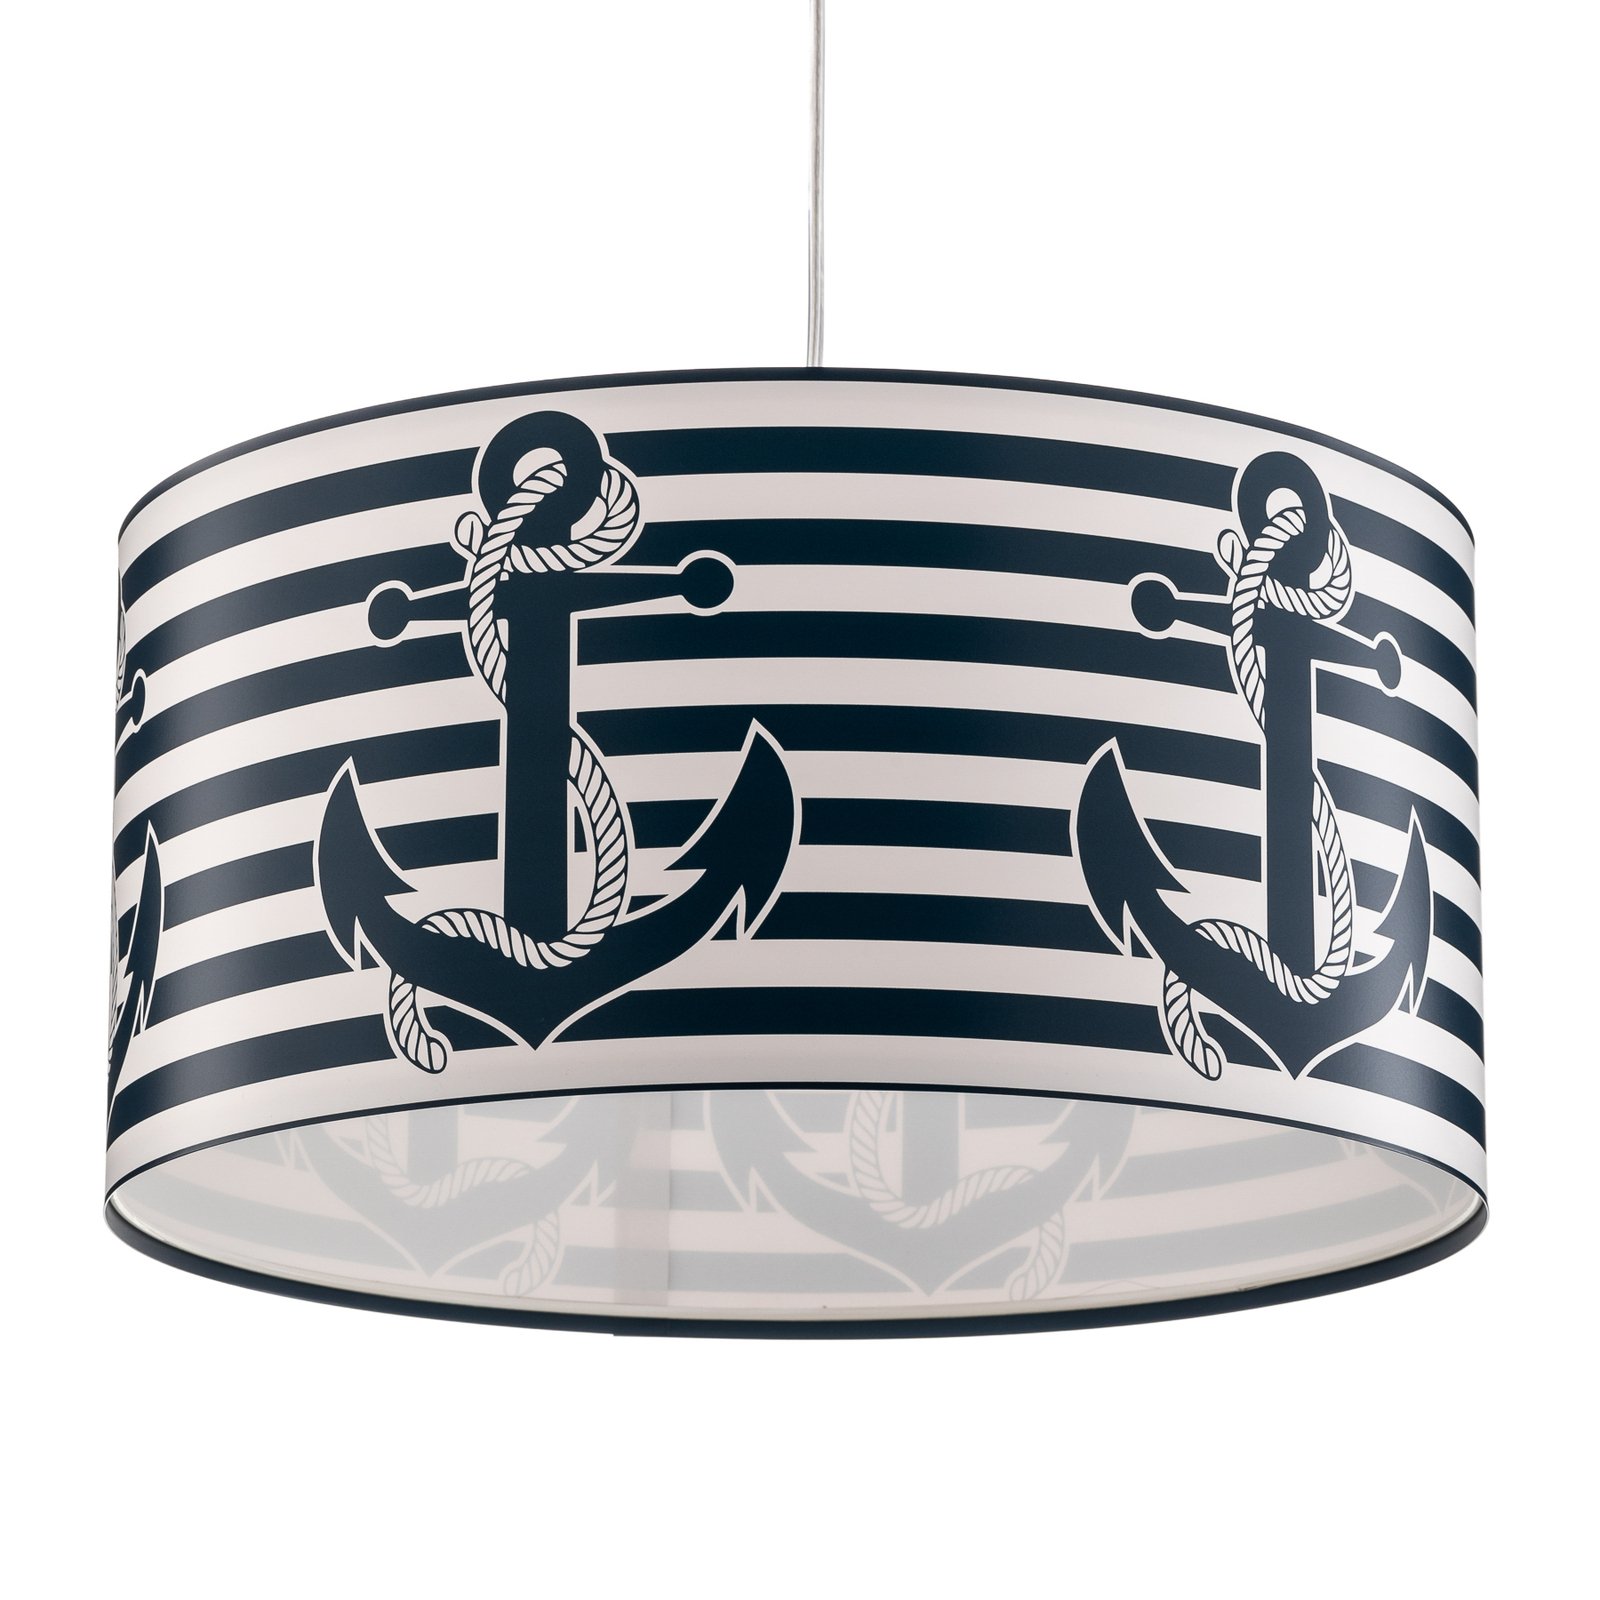 Morska lampa wisząca Ahoi z motywem kotwicy